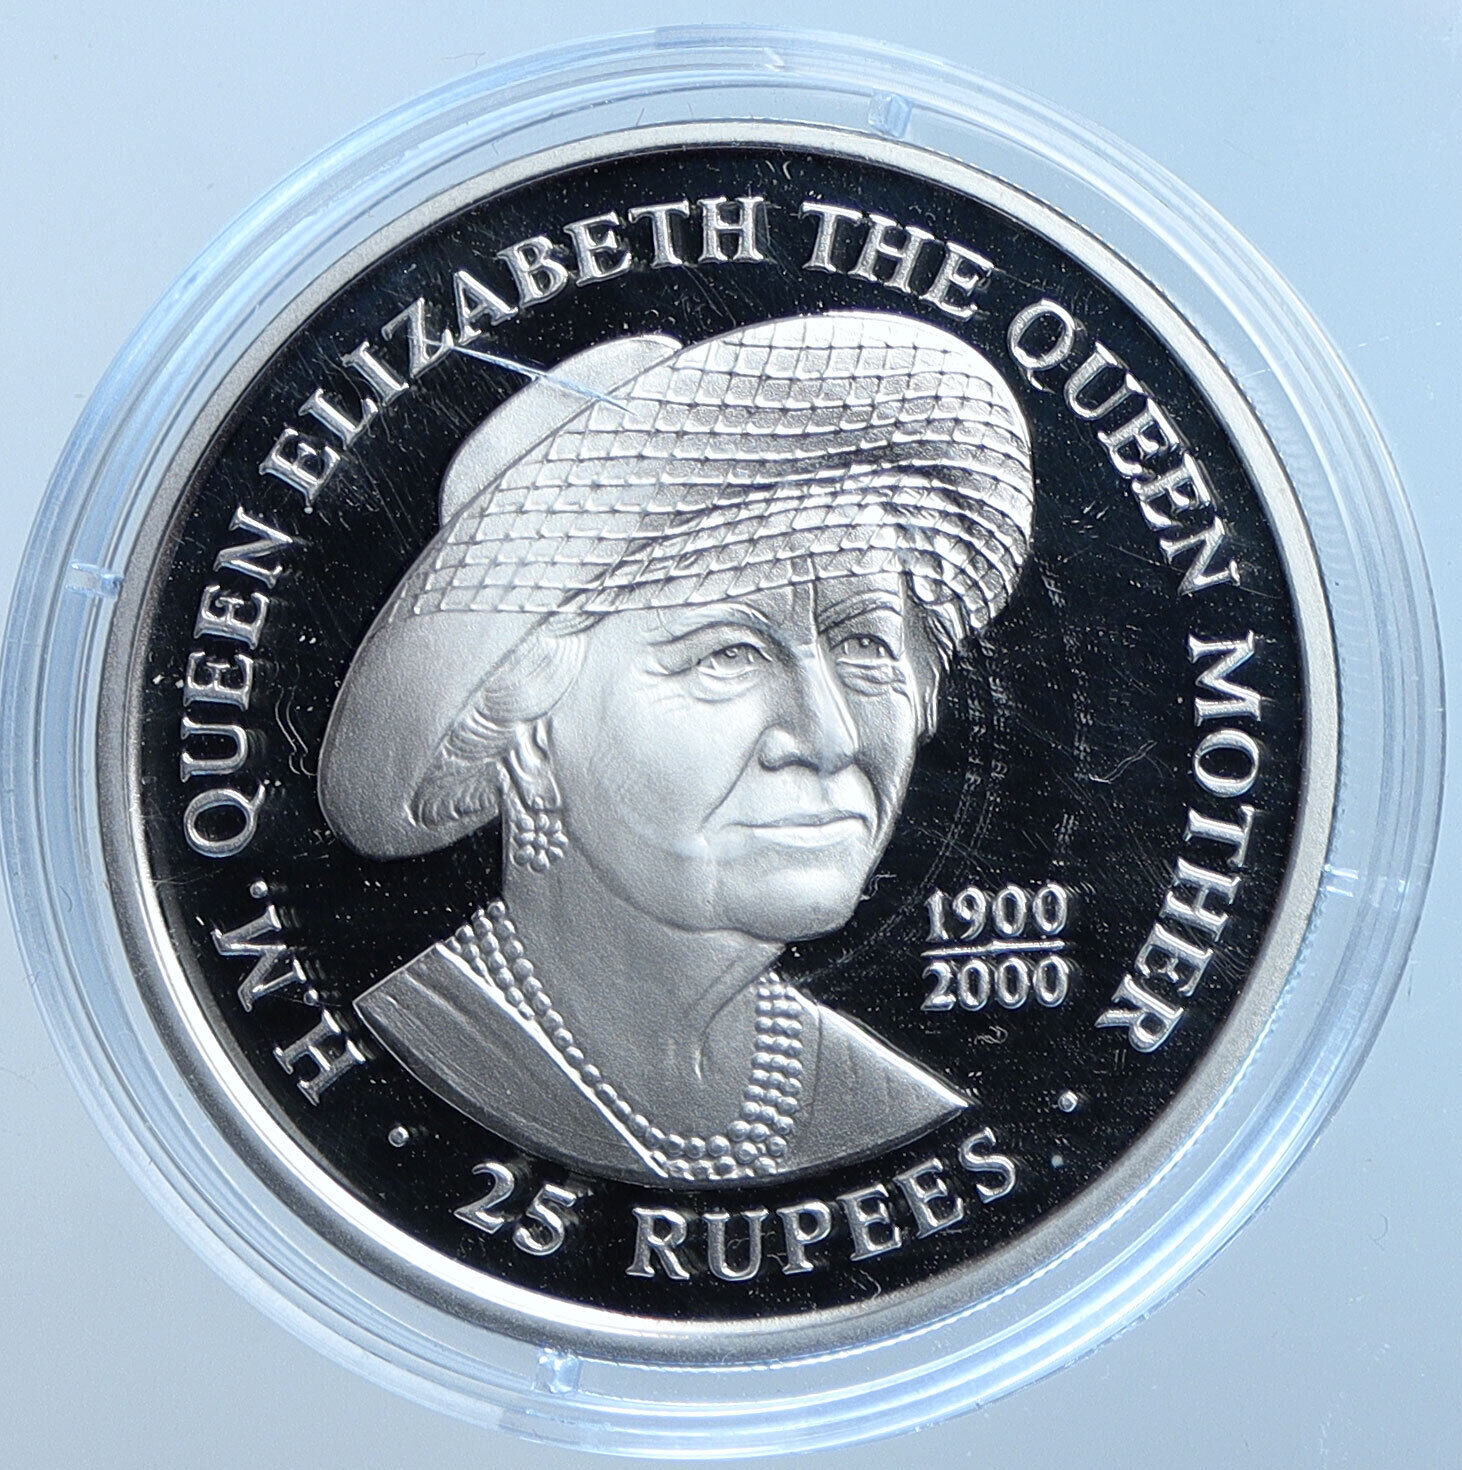 2000 SEYCHELLES Queen Mother Elizabeth II Proof SILVER 25 Rupees Coin i114599